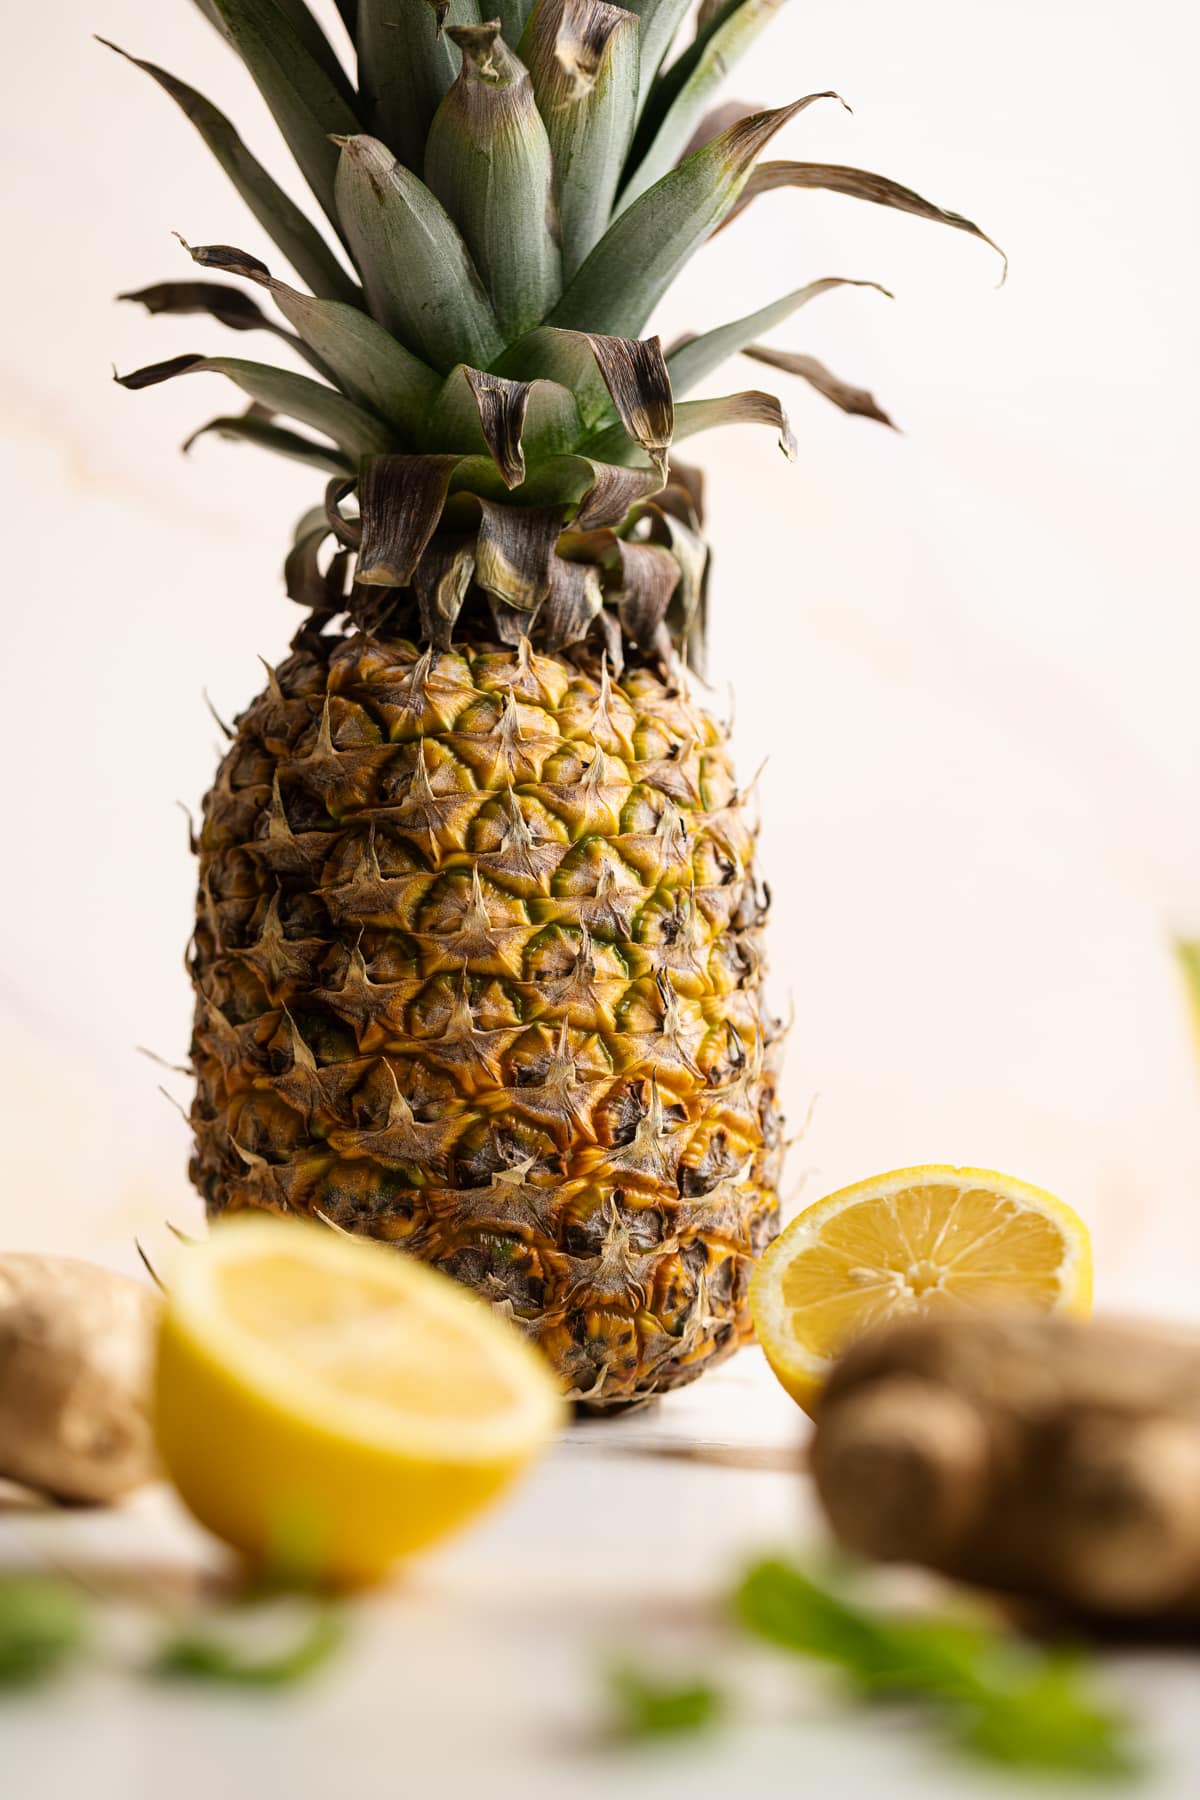 Pineapple Ginger Turmeric Lemonade